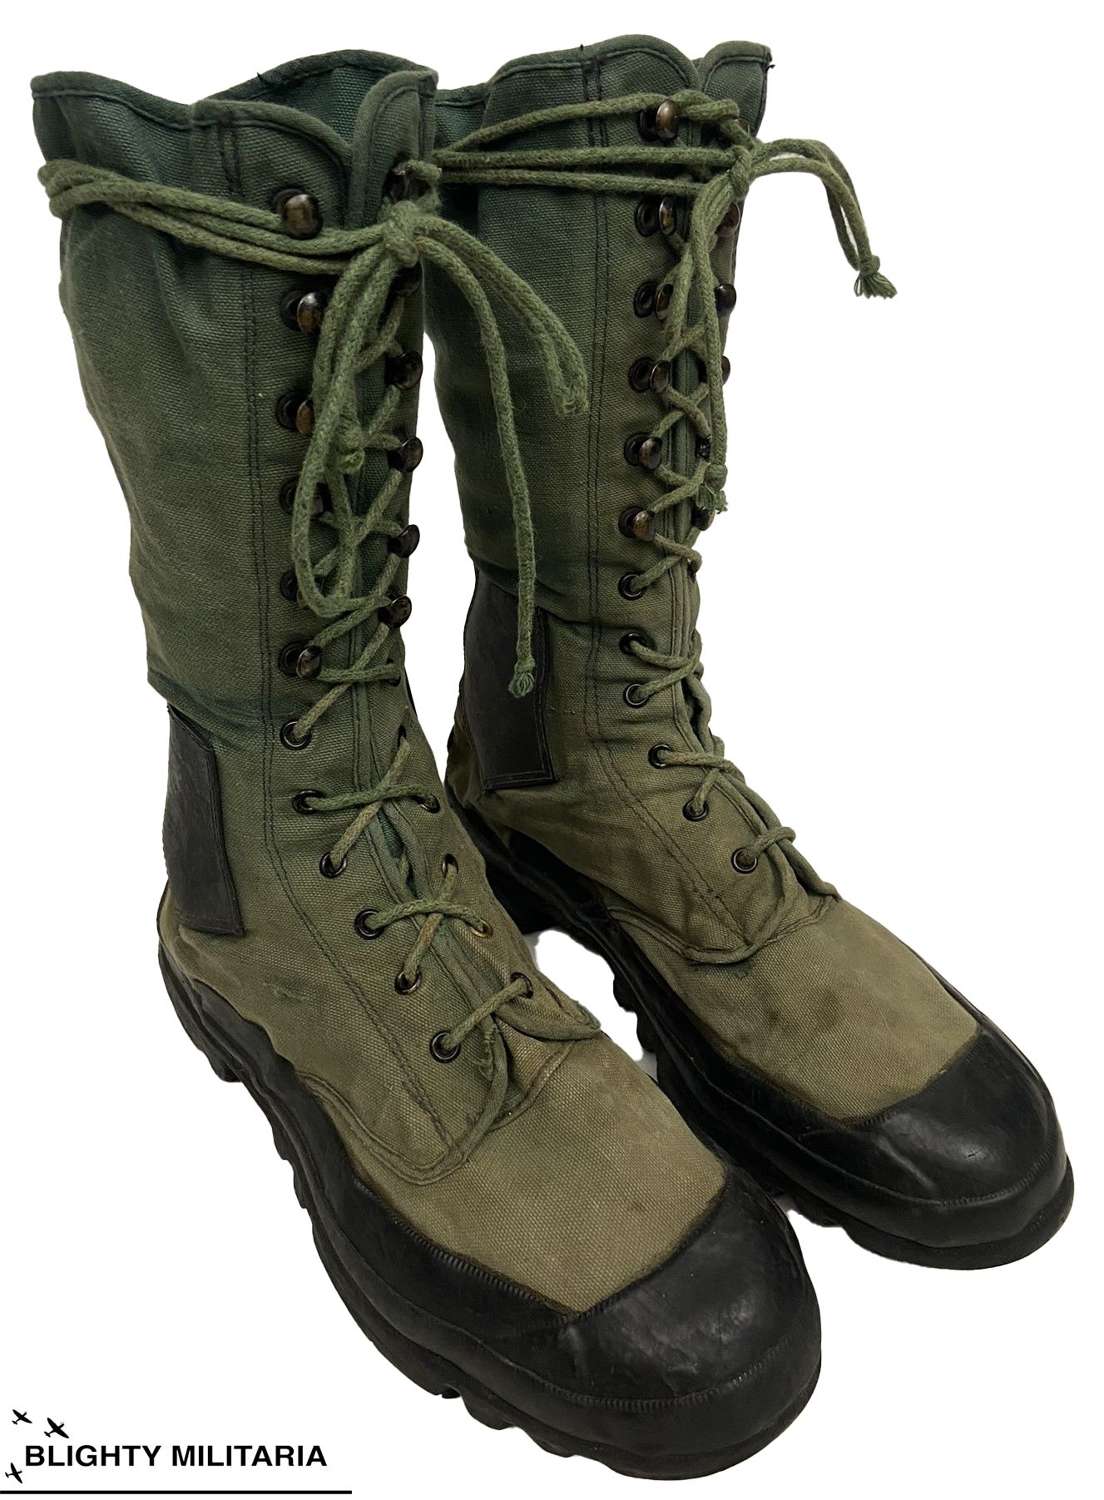 Original c.1950s British Army Jungle Boots - Size 9